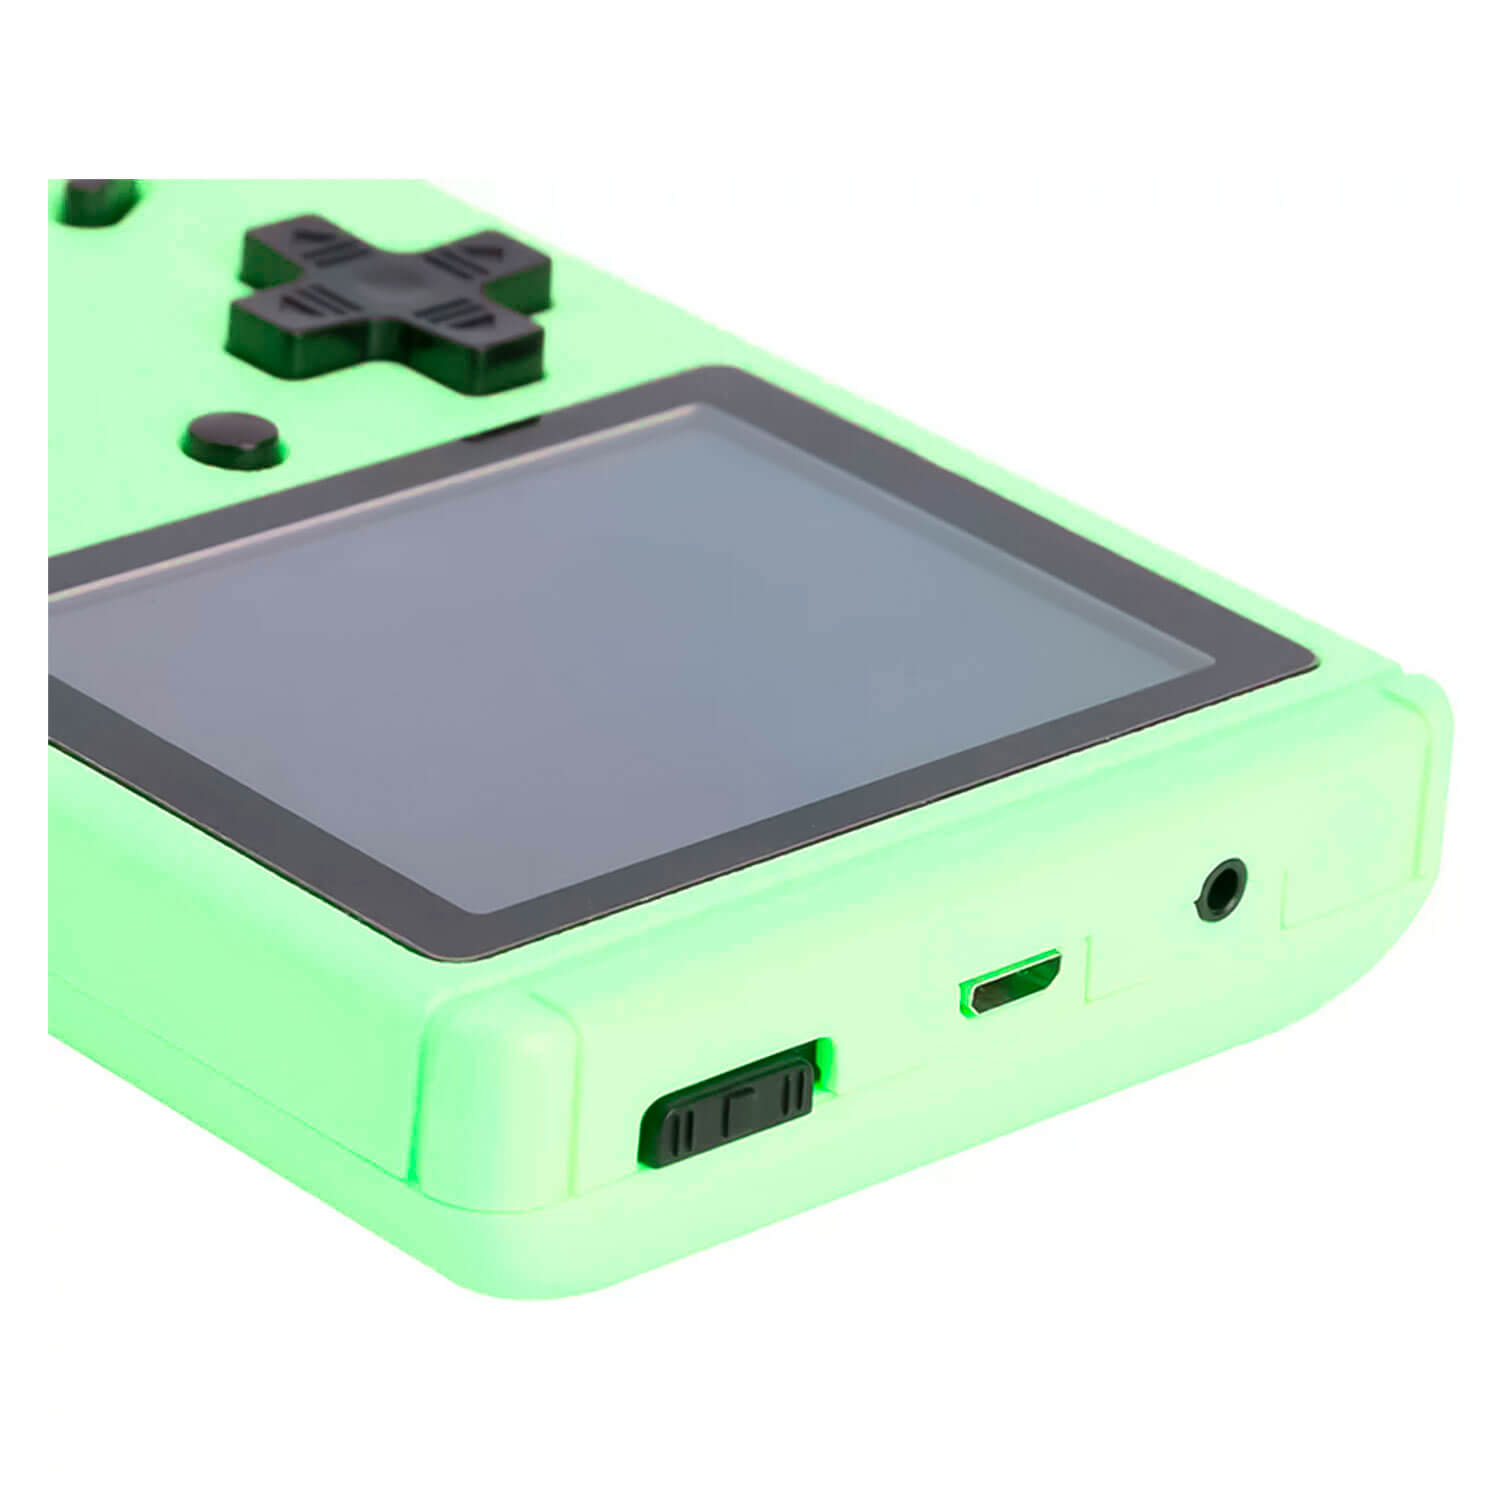 Console Portátil Game Boy Game Box Plus 500 Jogos - Verde